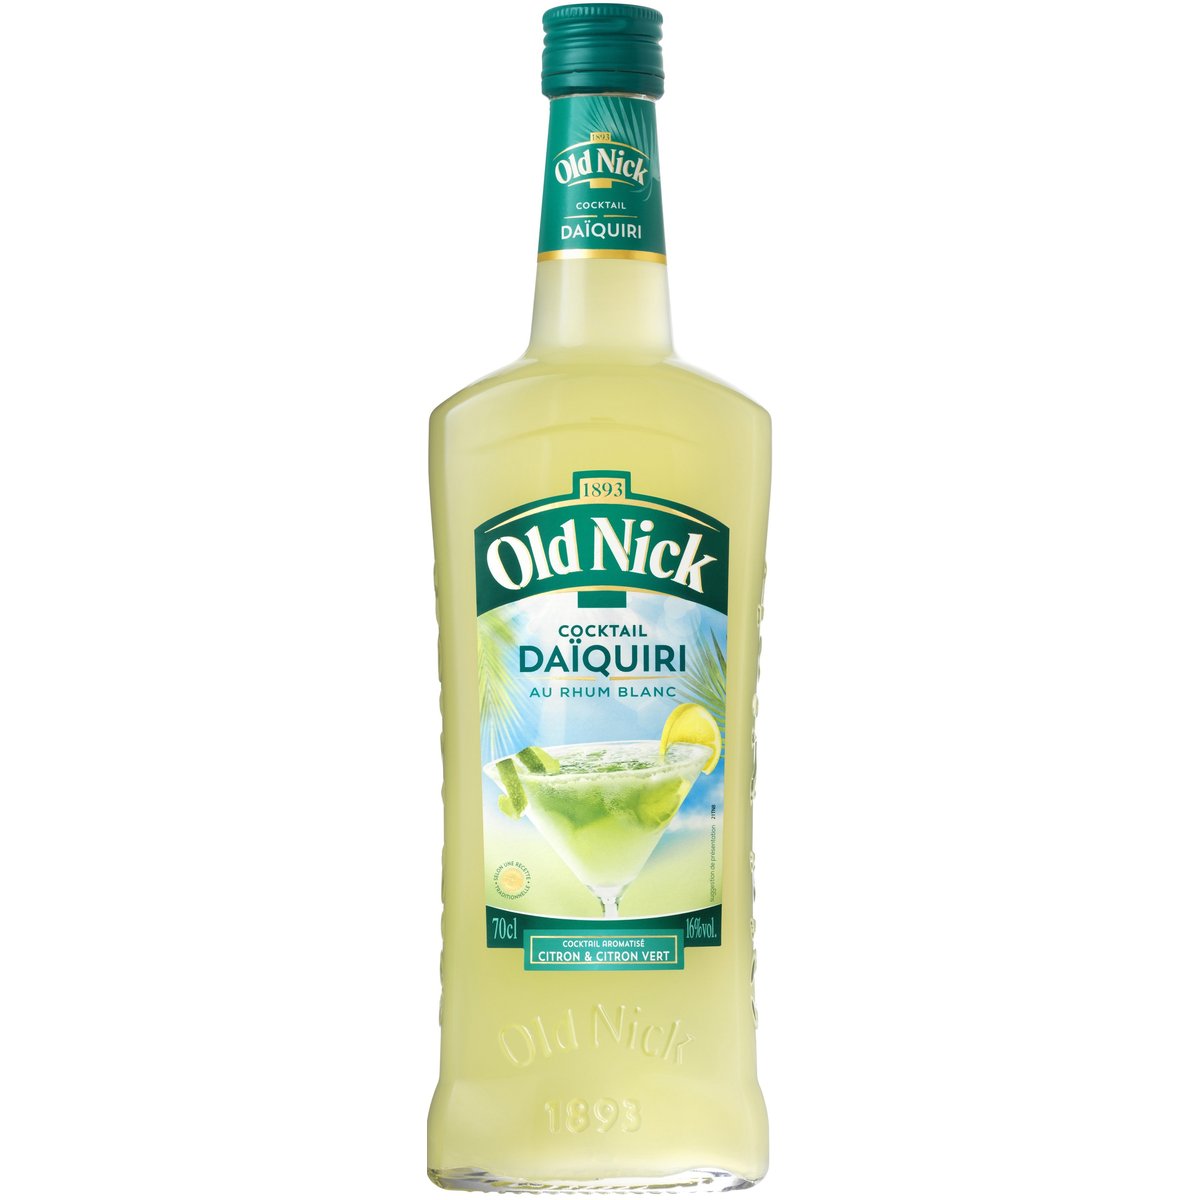 Old Nick Daiquiri Cocktail 16%